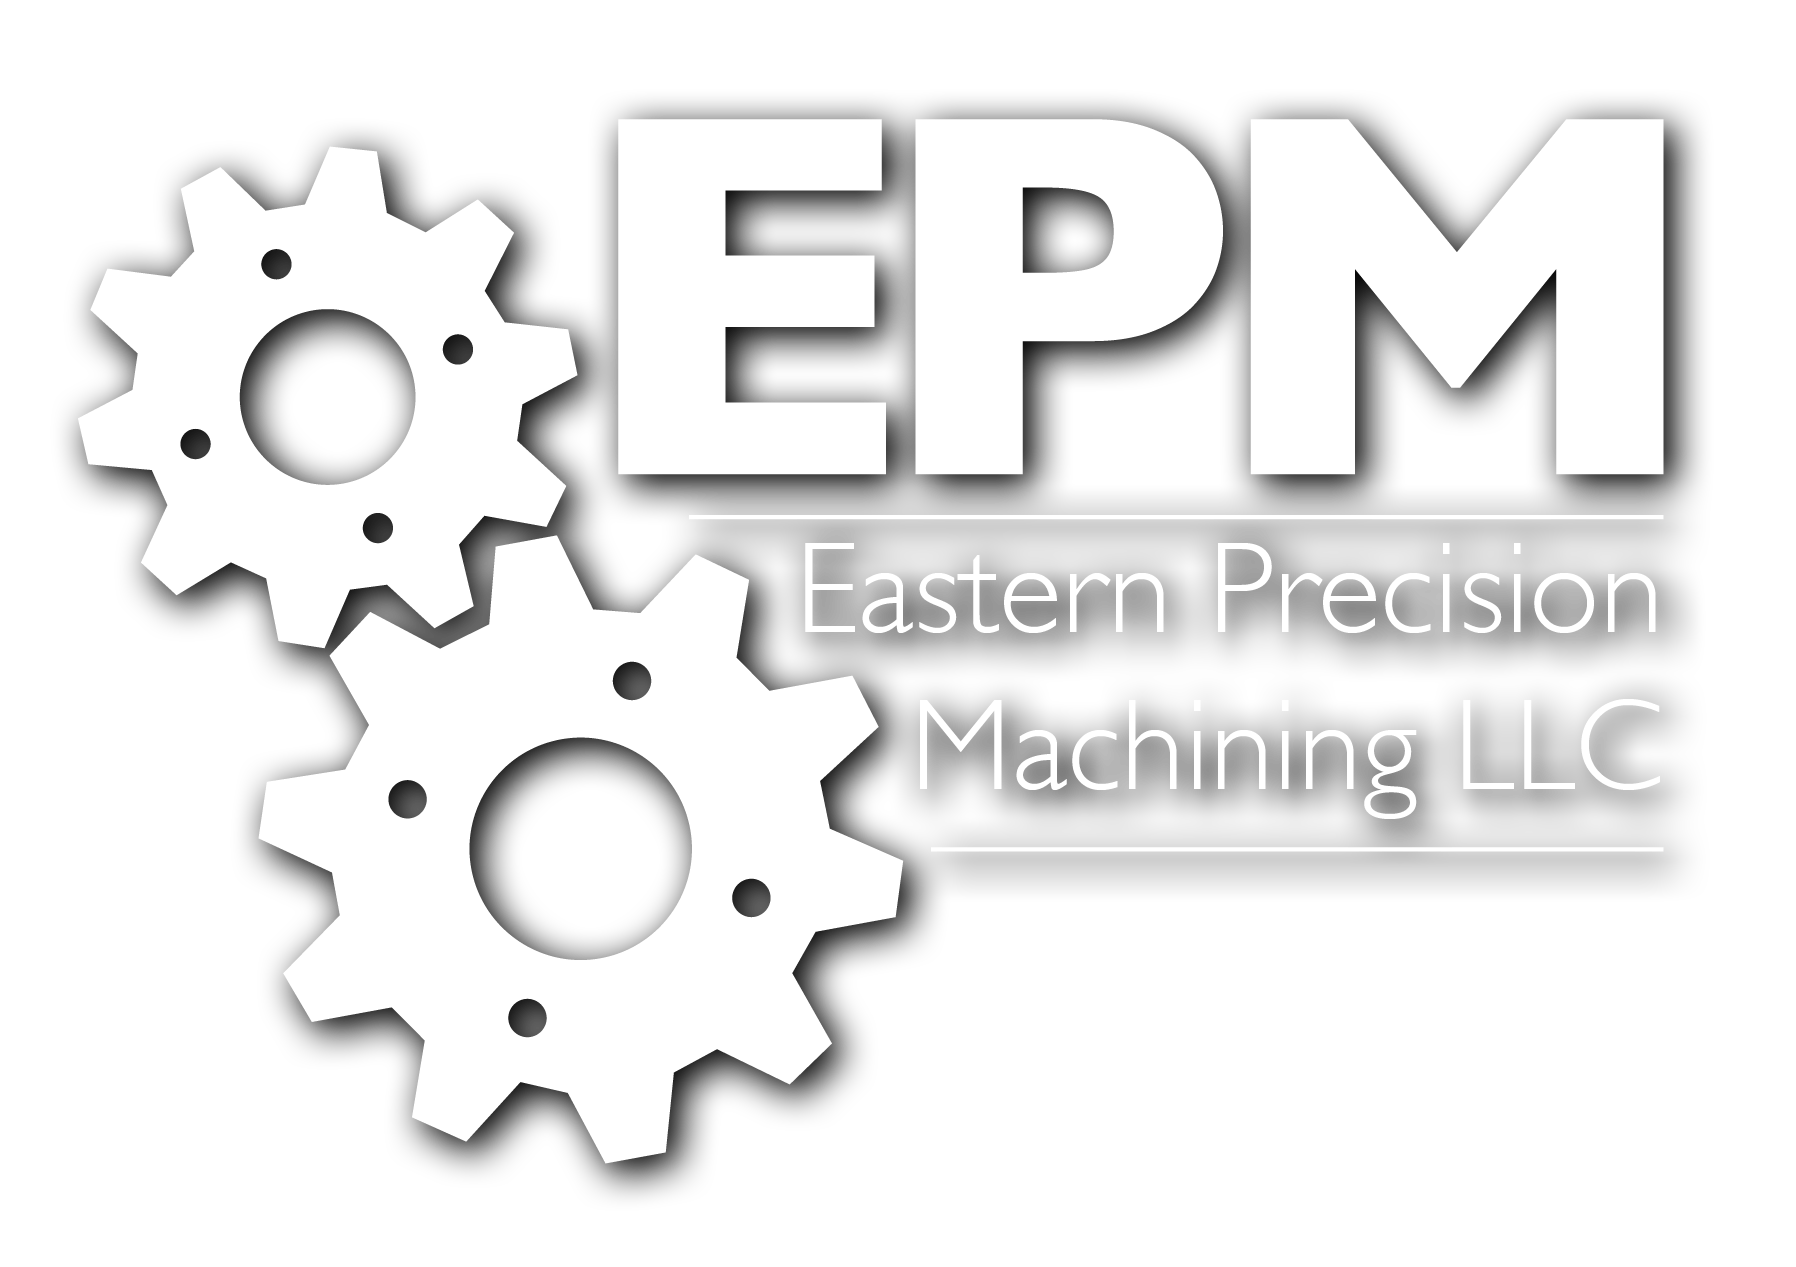 Eastern Precision Machining